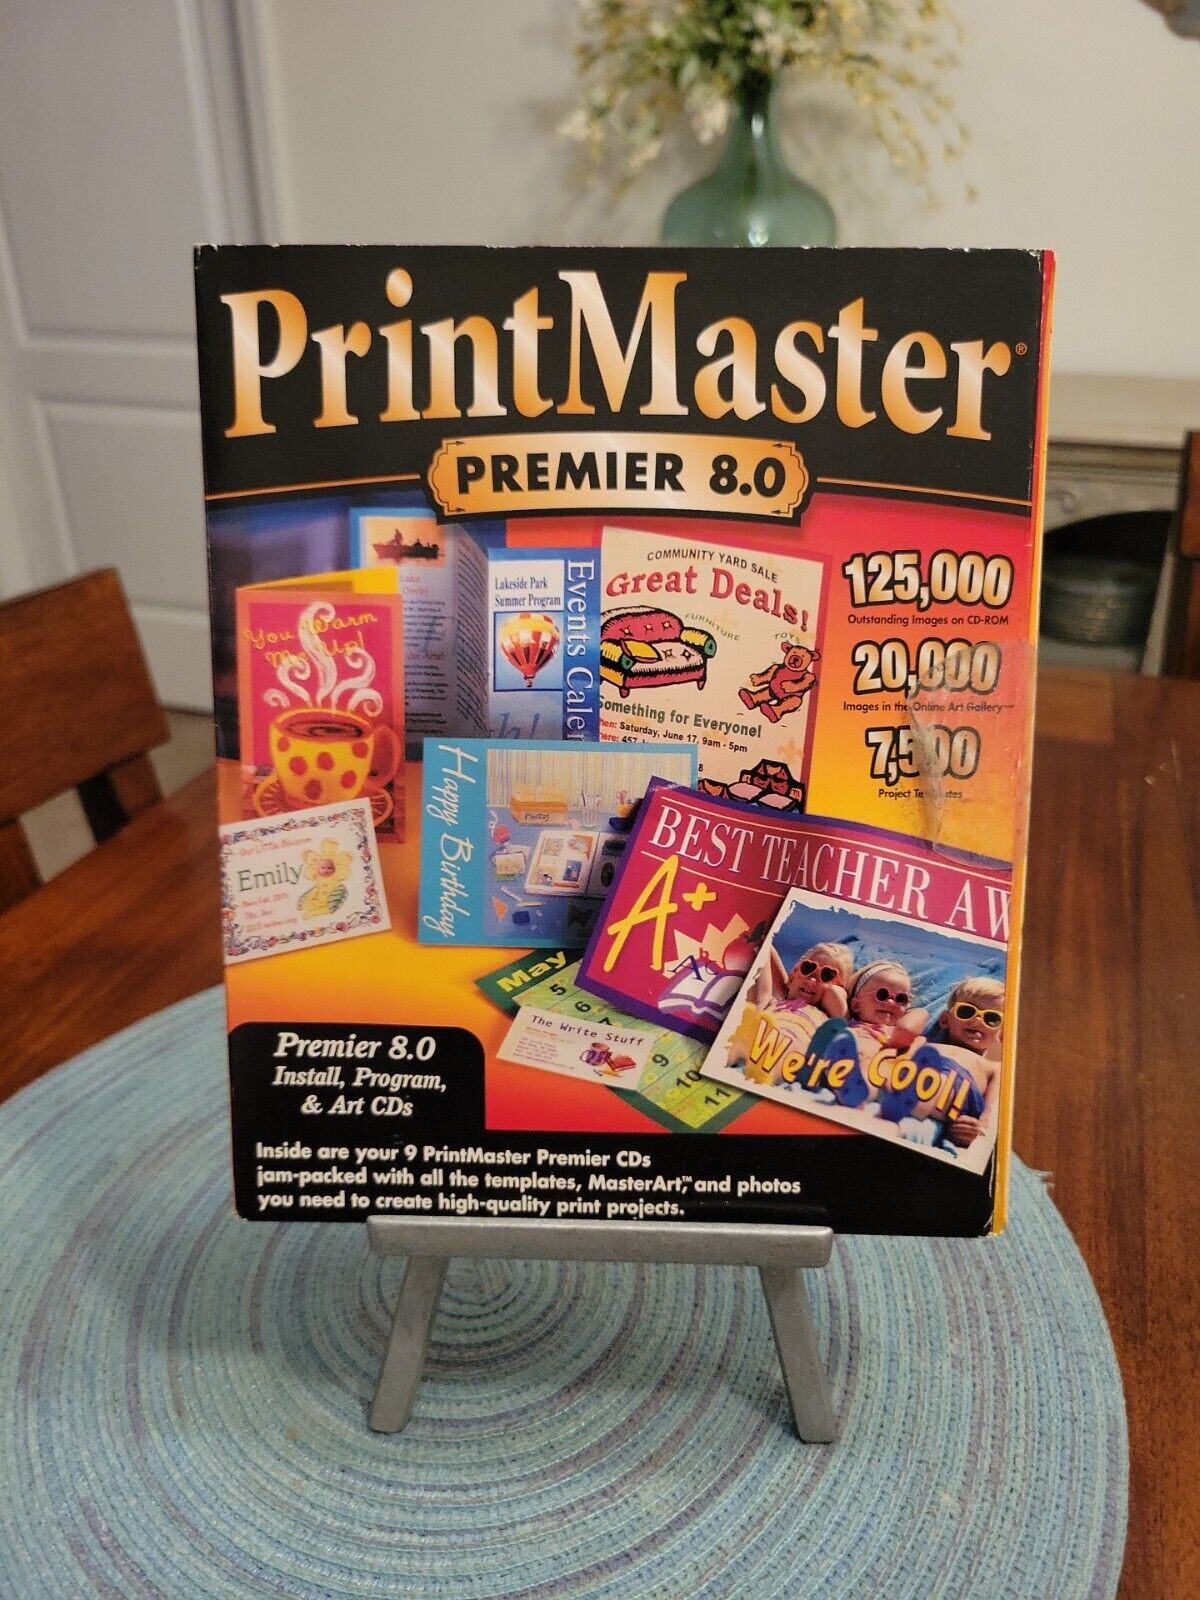 Printmaster Premier 8.0 Install Program and Art Cd's